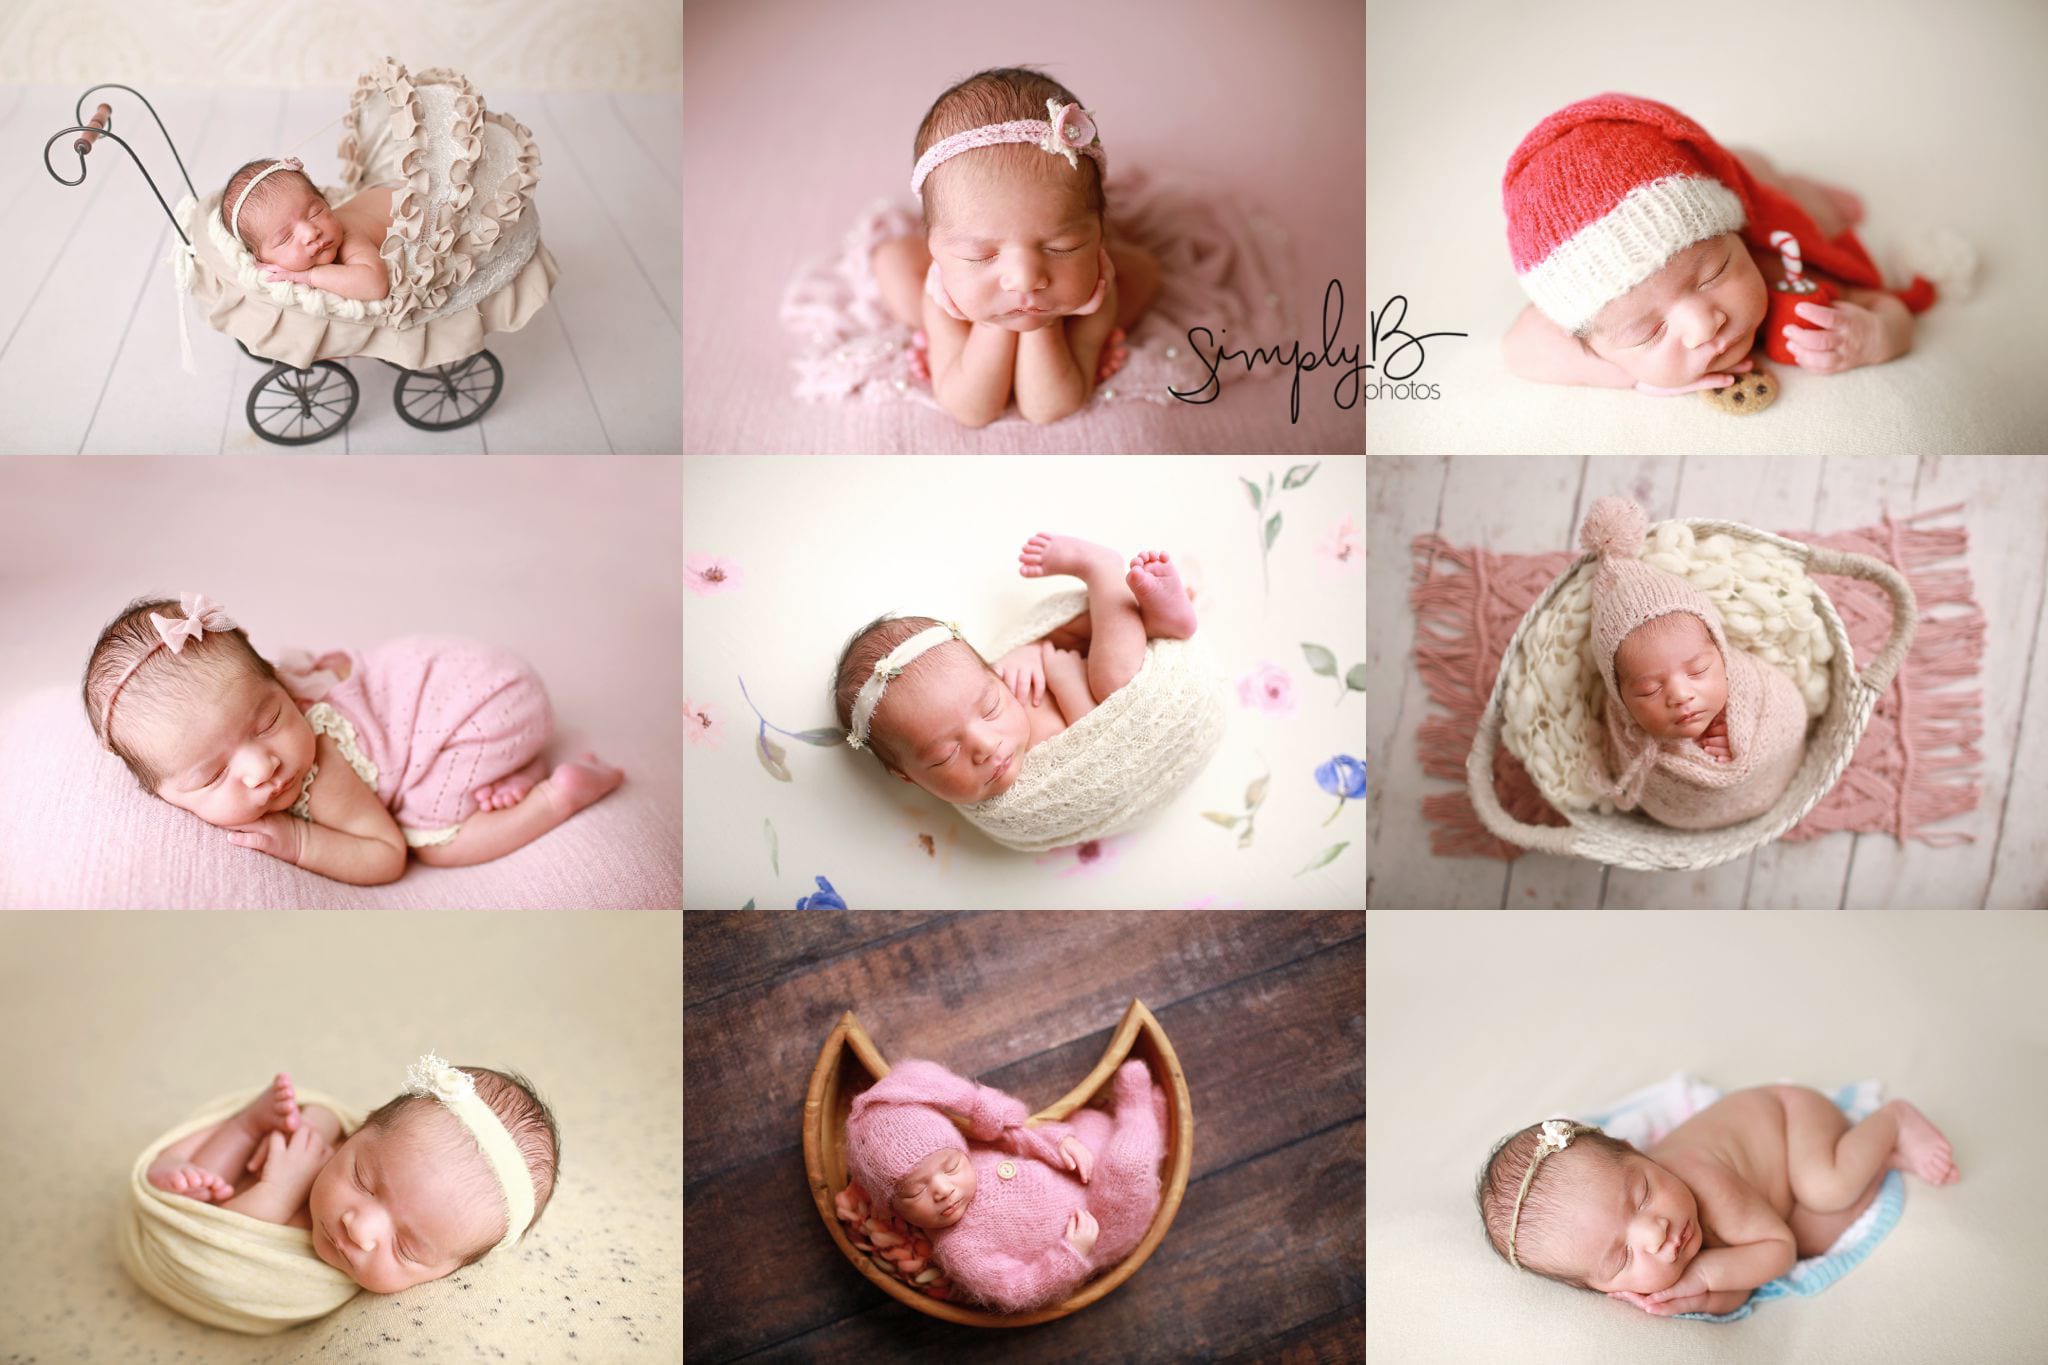 edmonton newborn photography studio baby girl